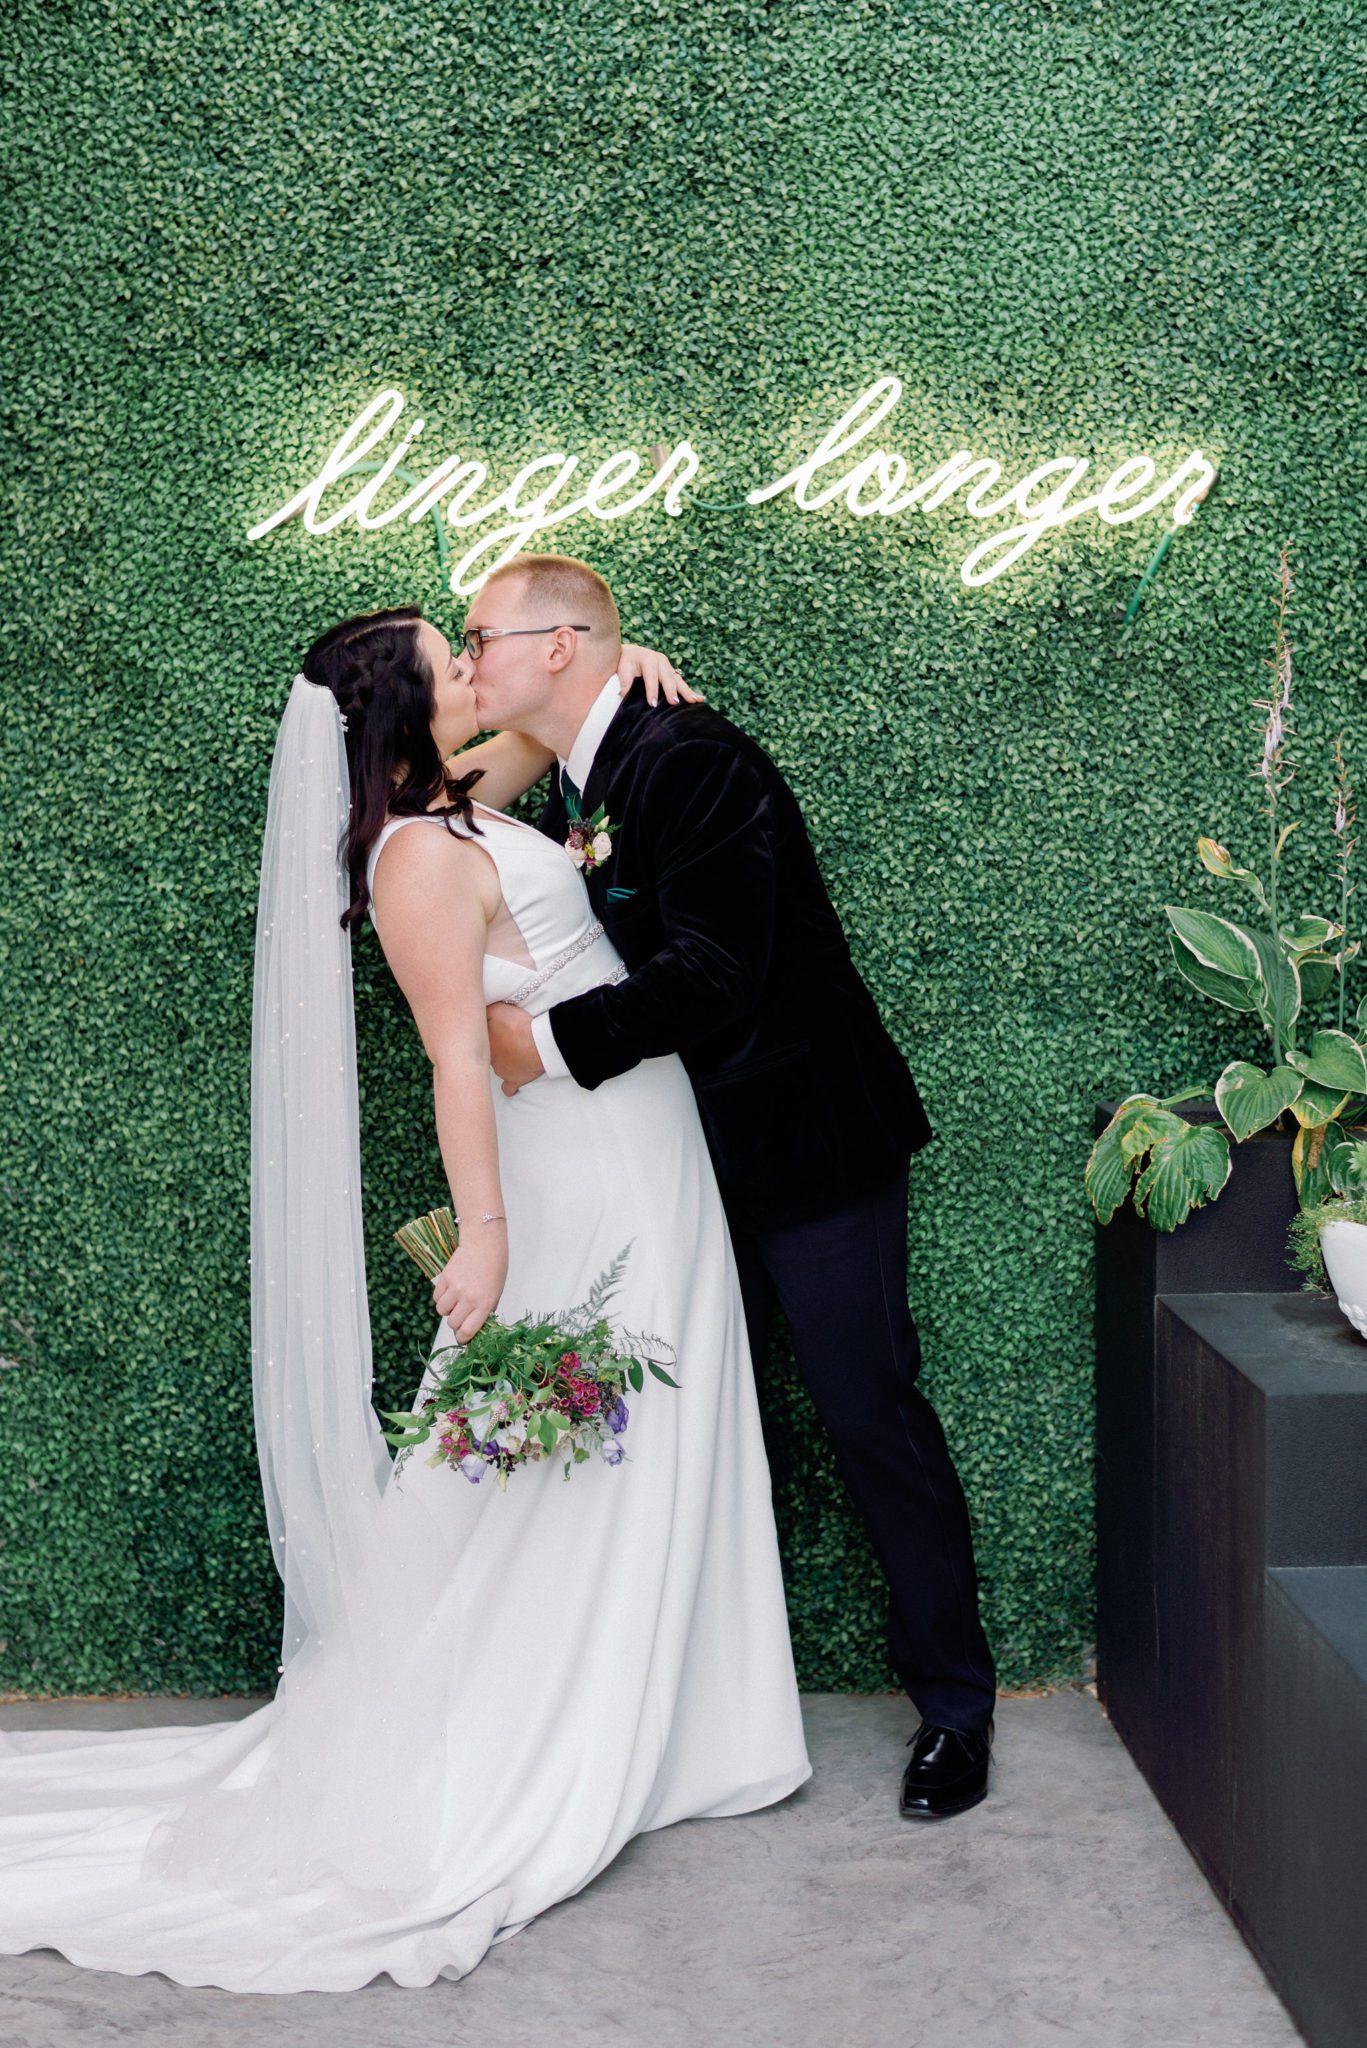 neon wedding signage, wedding kiss with faux foliage, wedding portraits, Jewel toned Wedding Colour palette